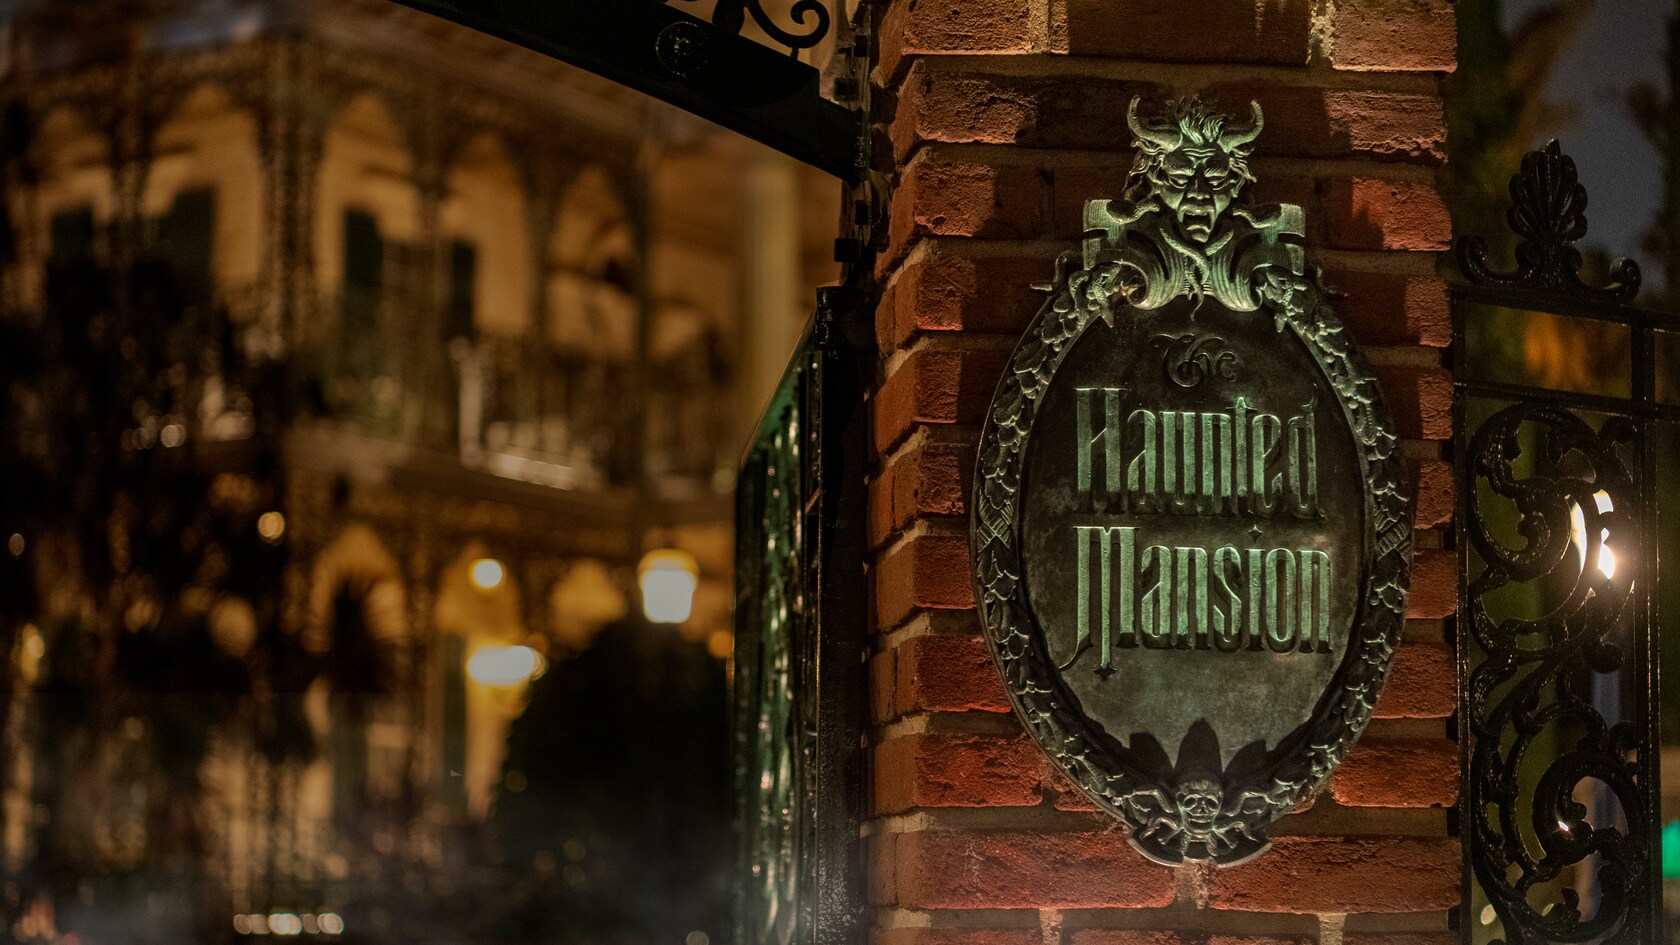 Haunted Mansion Disneyland Park Disneyland Resort